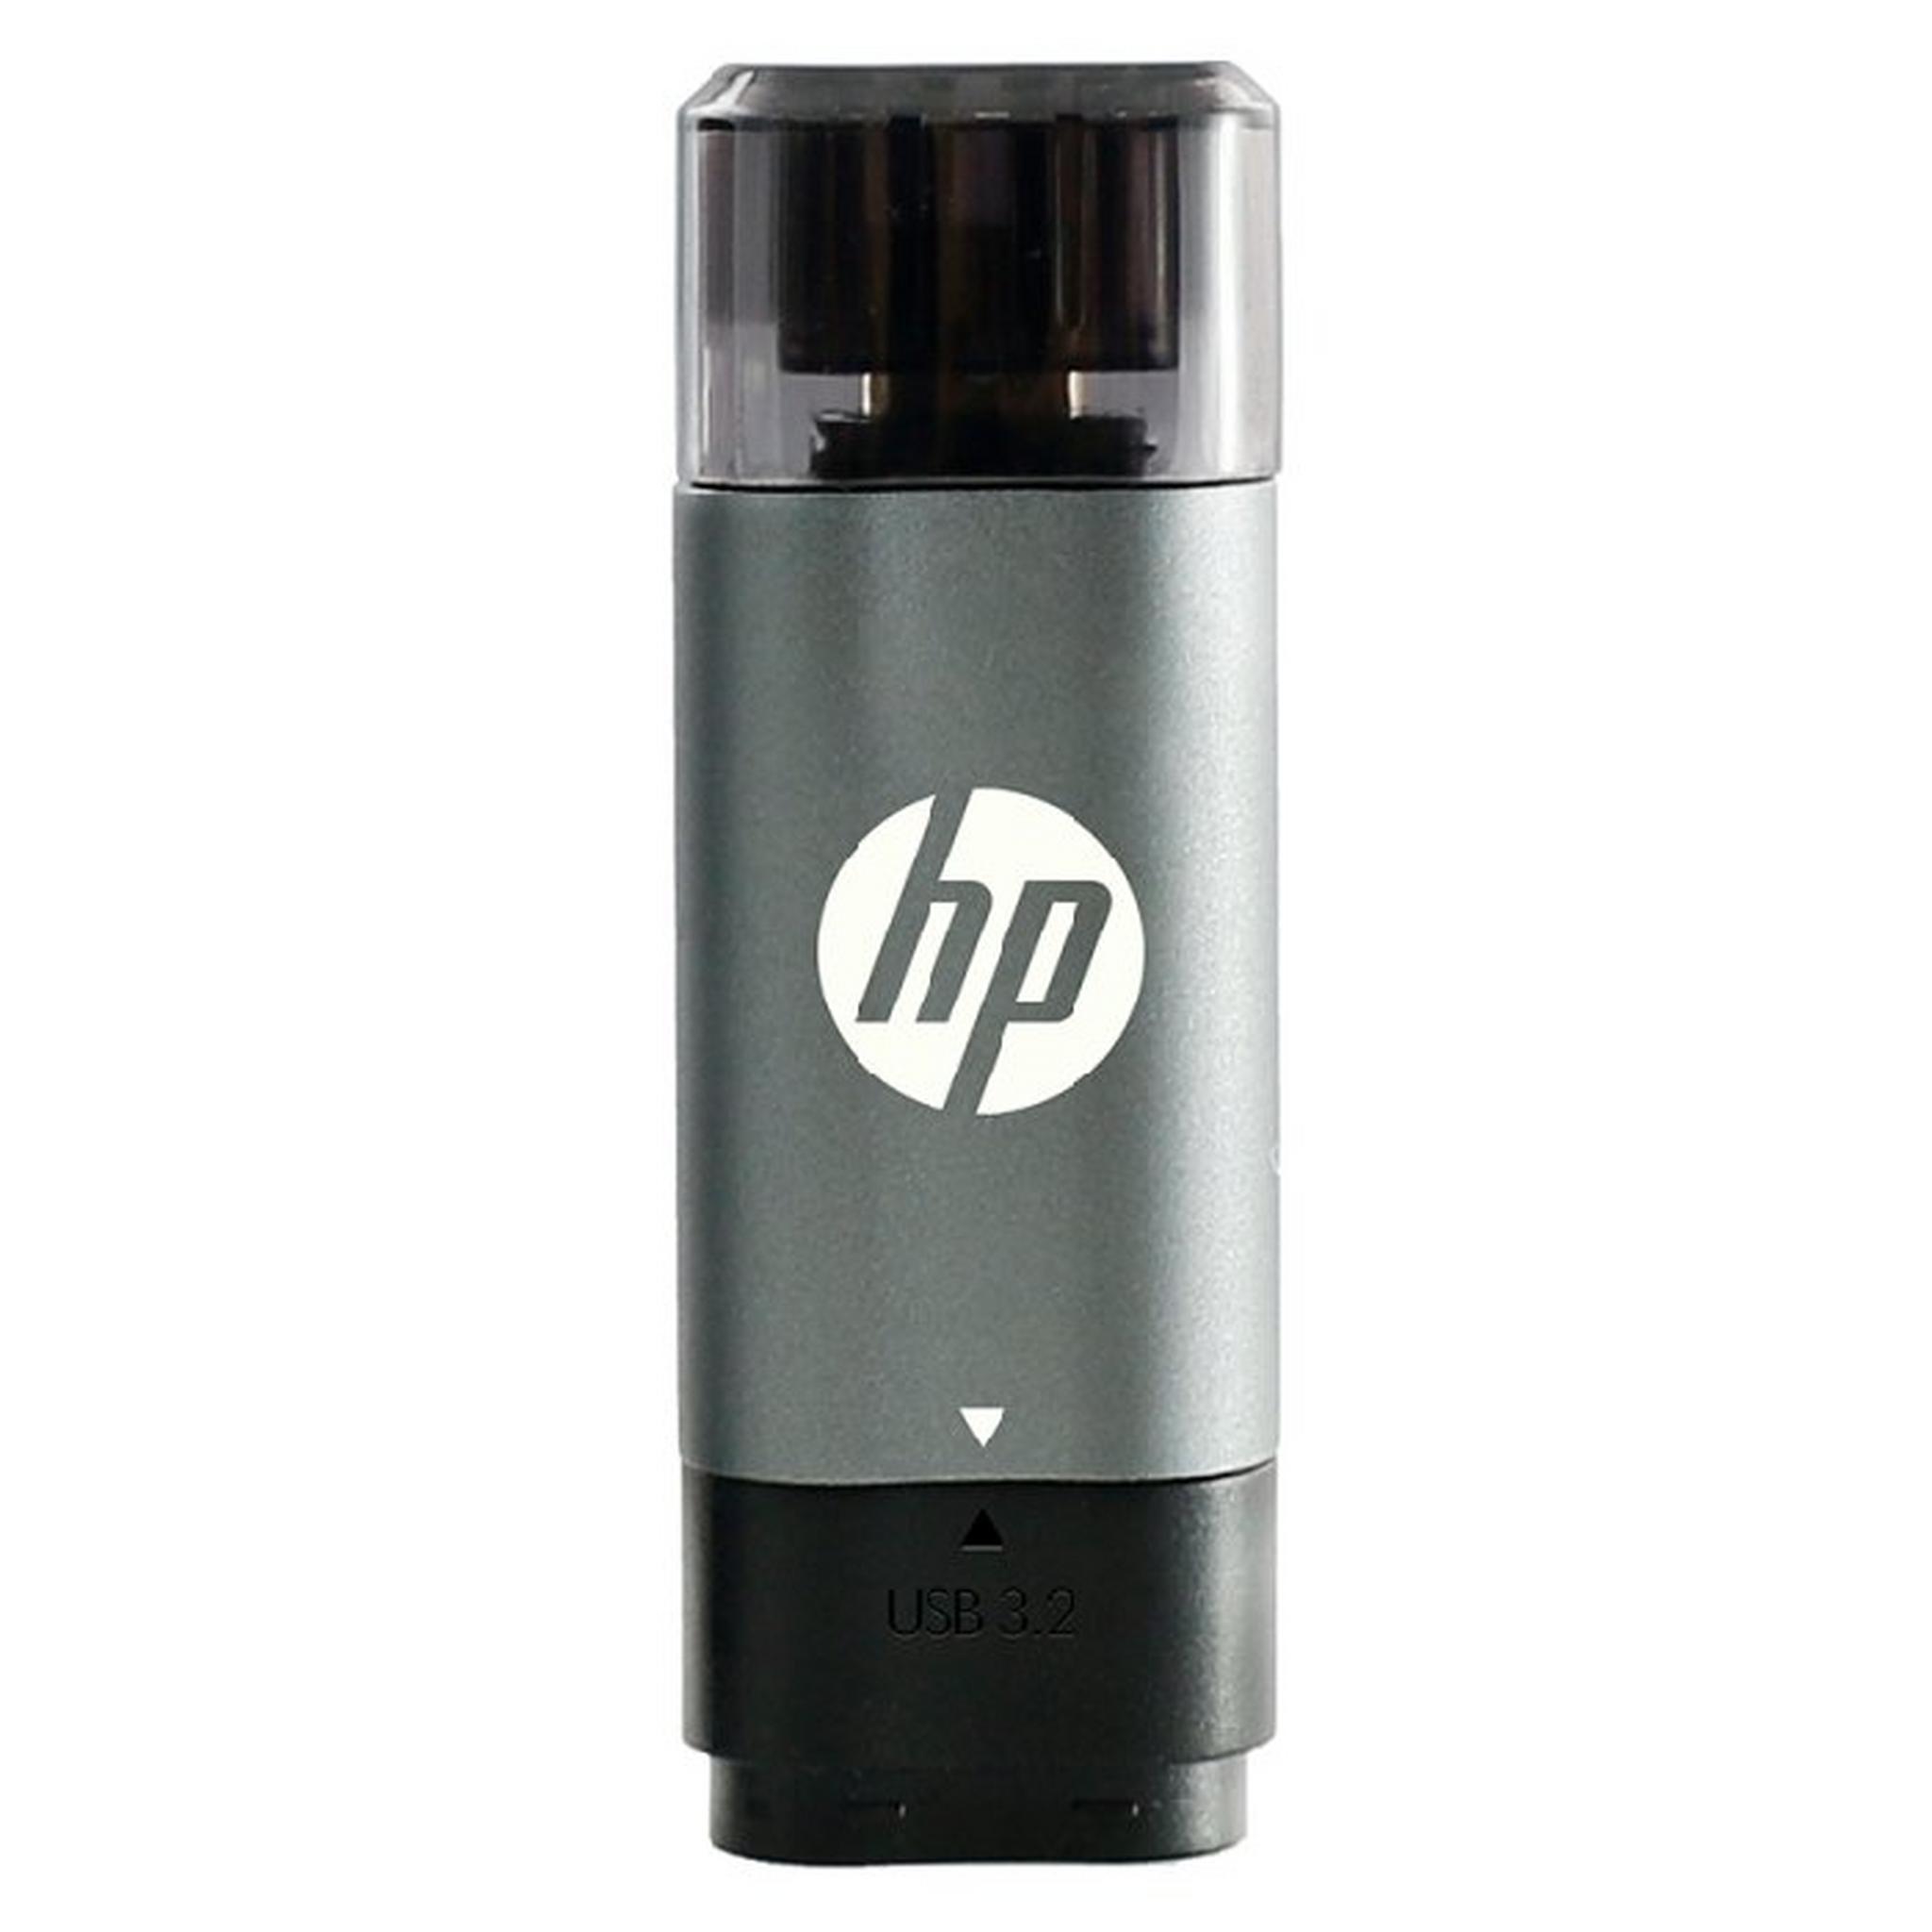 HP 3.2 128 GB Micro USB Flash Drive (5600B)